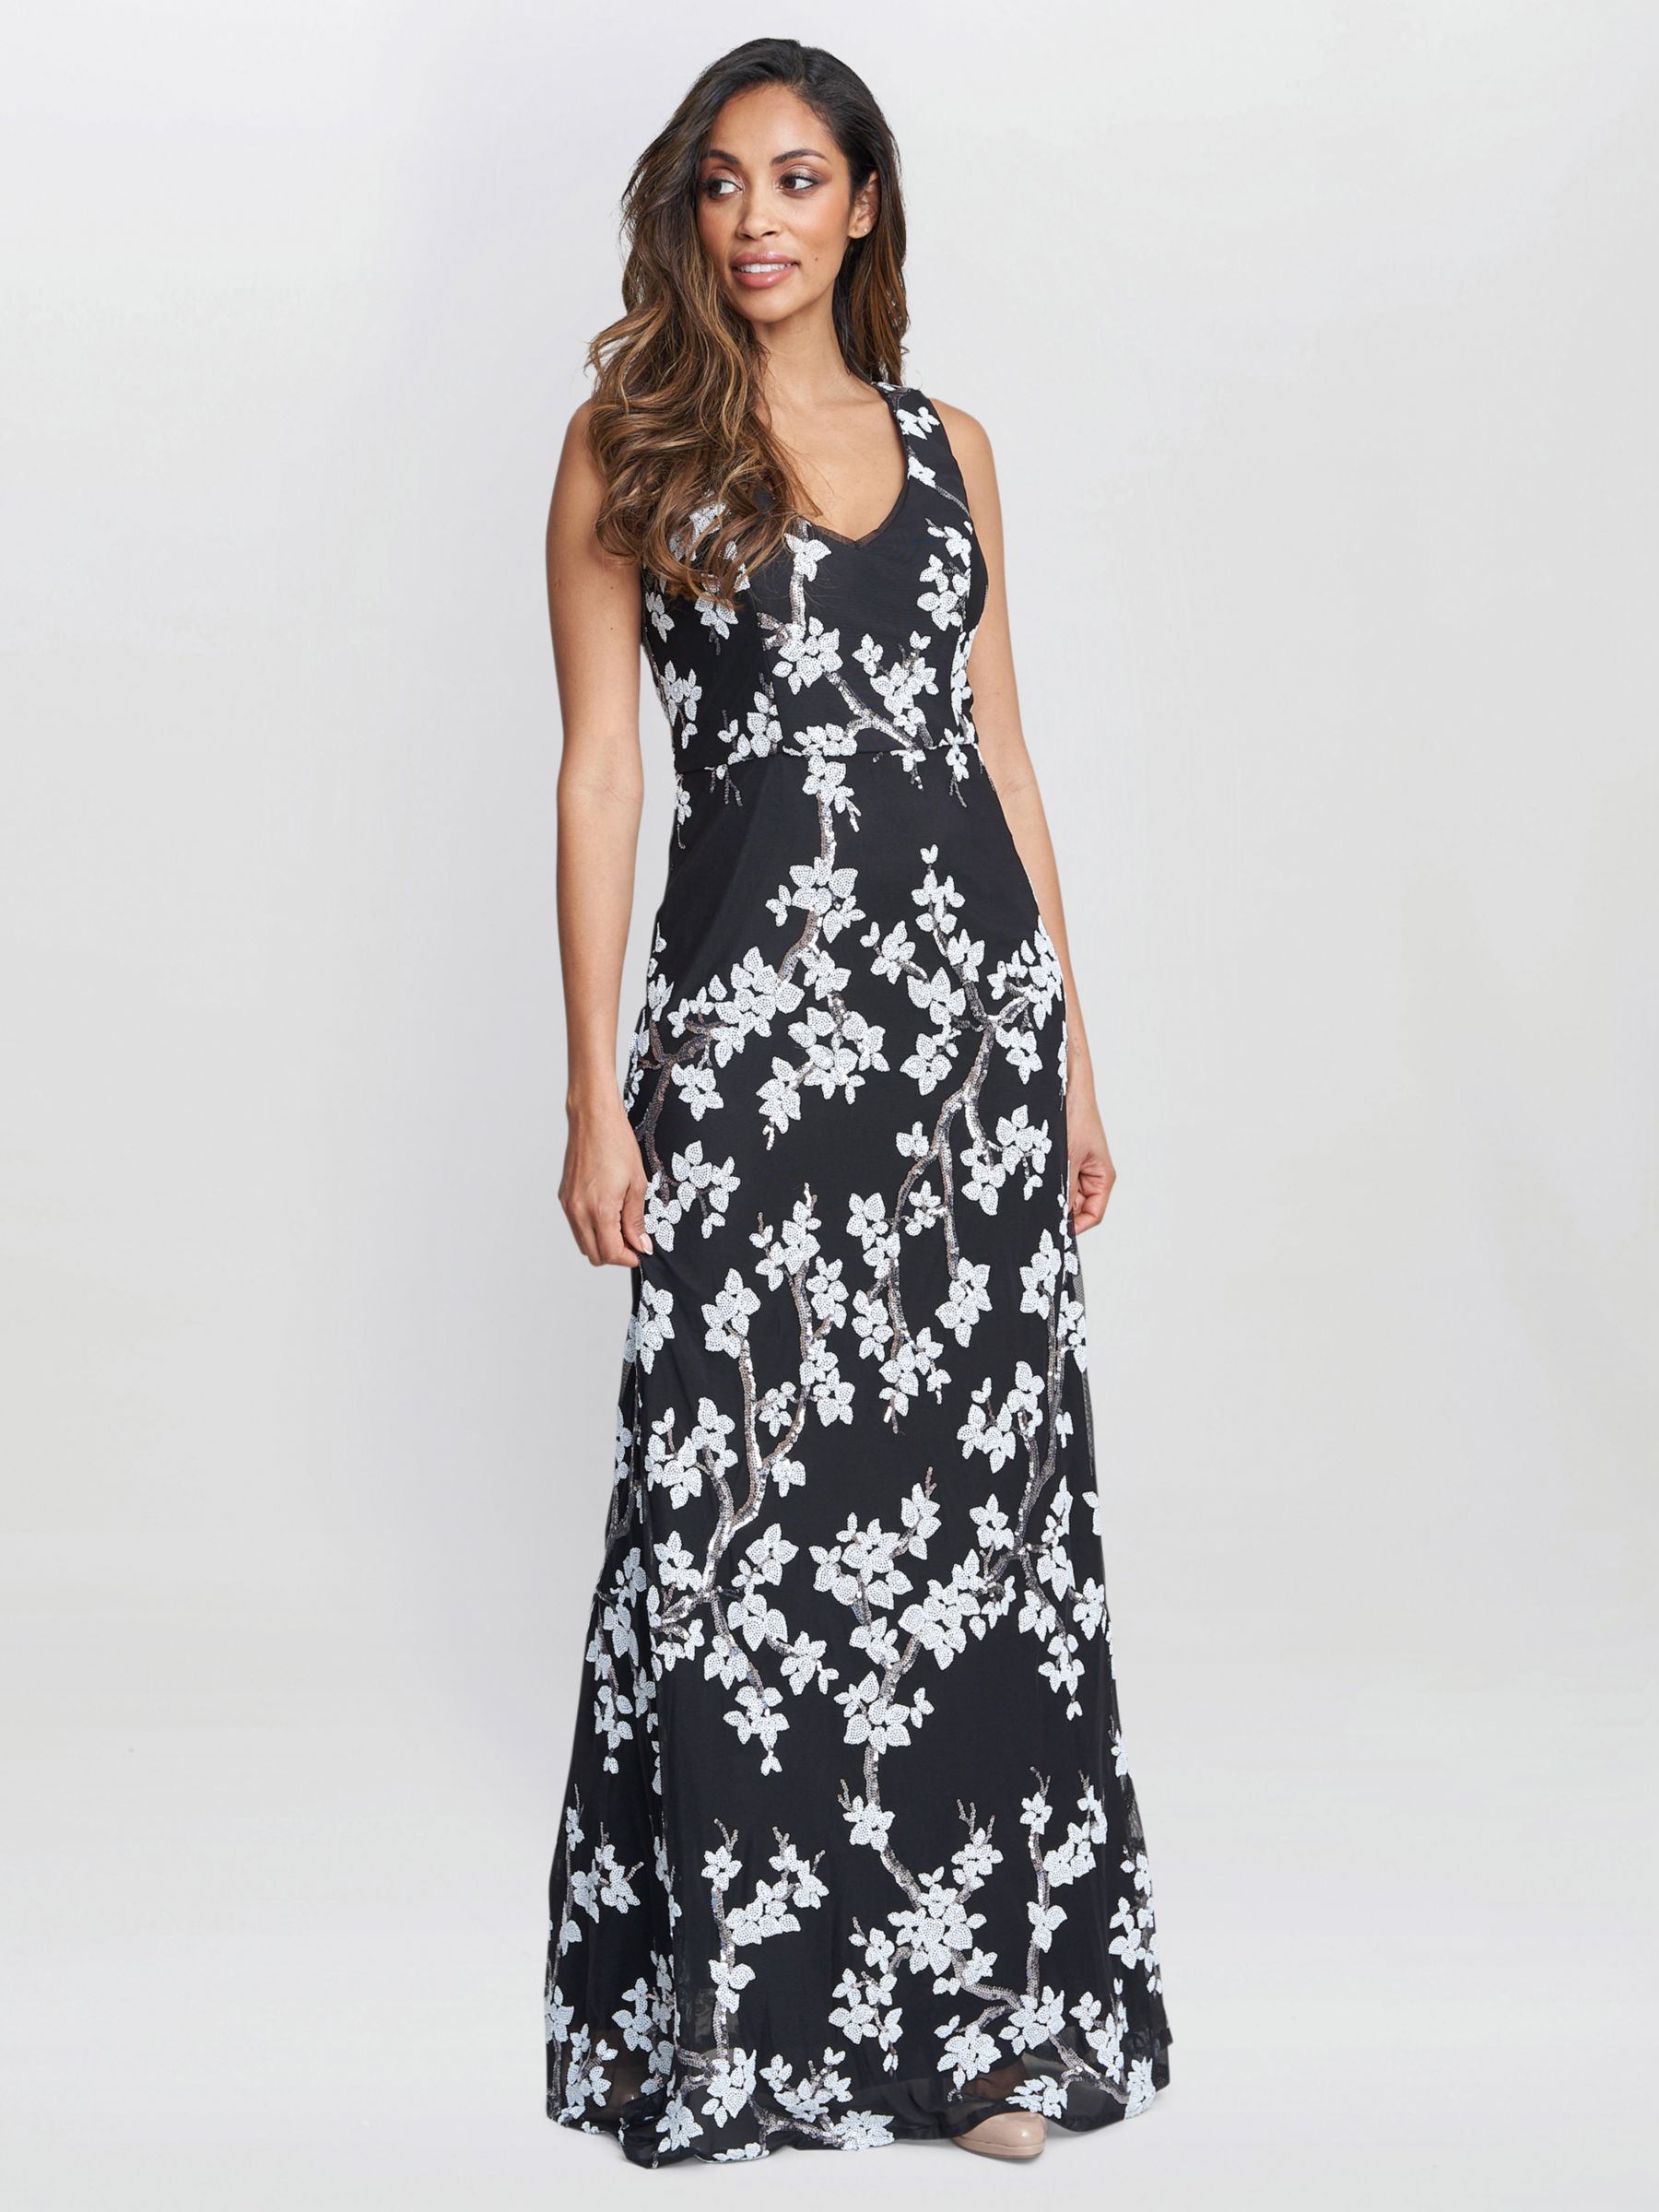 Gina Bacconi Flavia Floral Maxi Dress, Black/White, 8